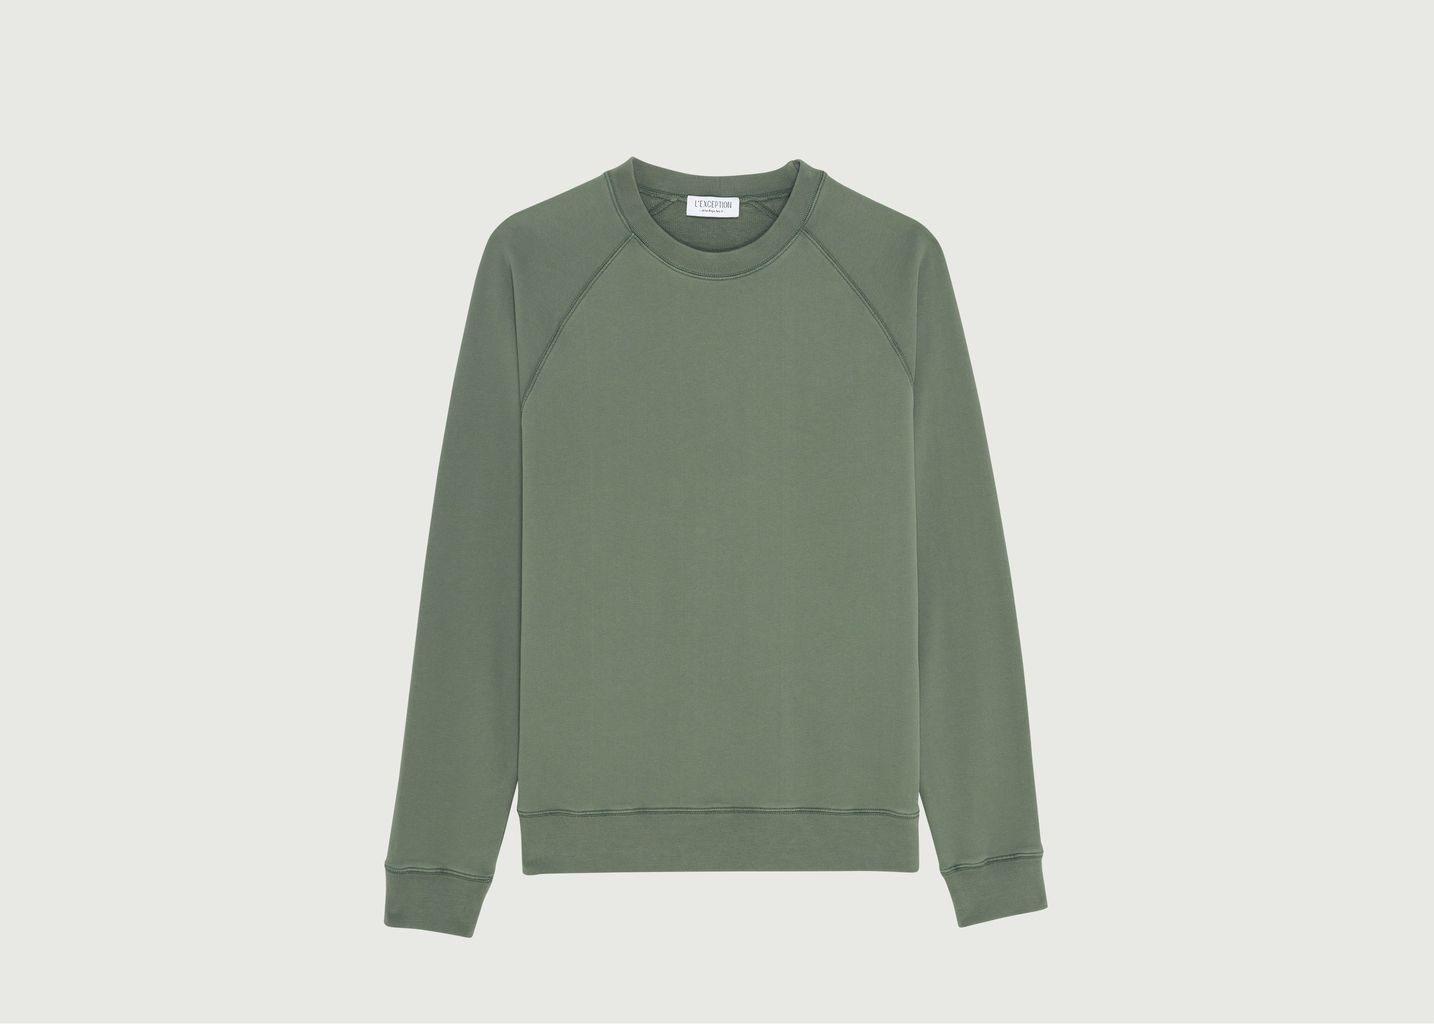 lexception-paris-organic-cotton-sweatshirt-3